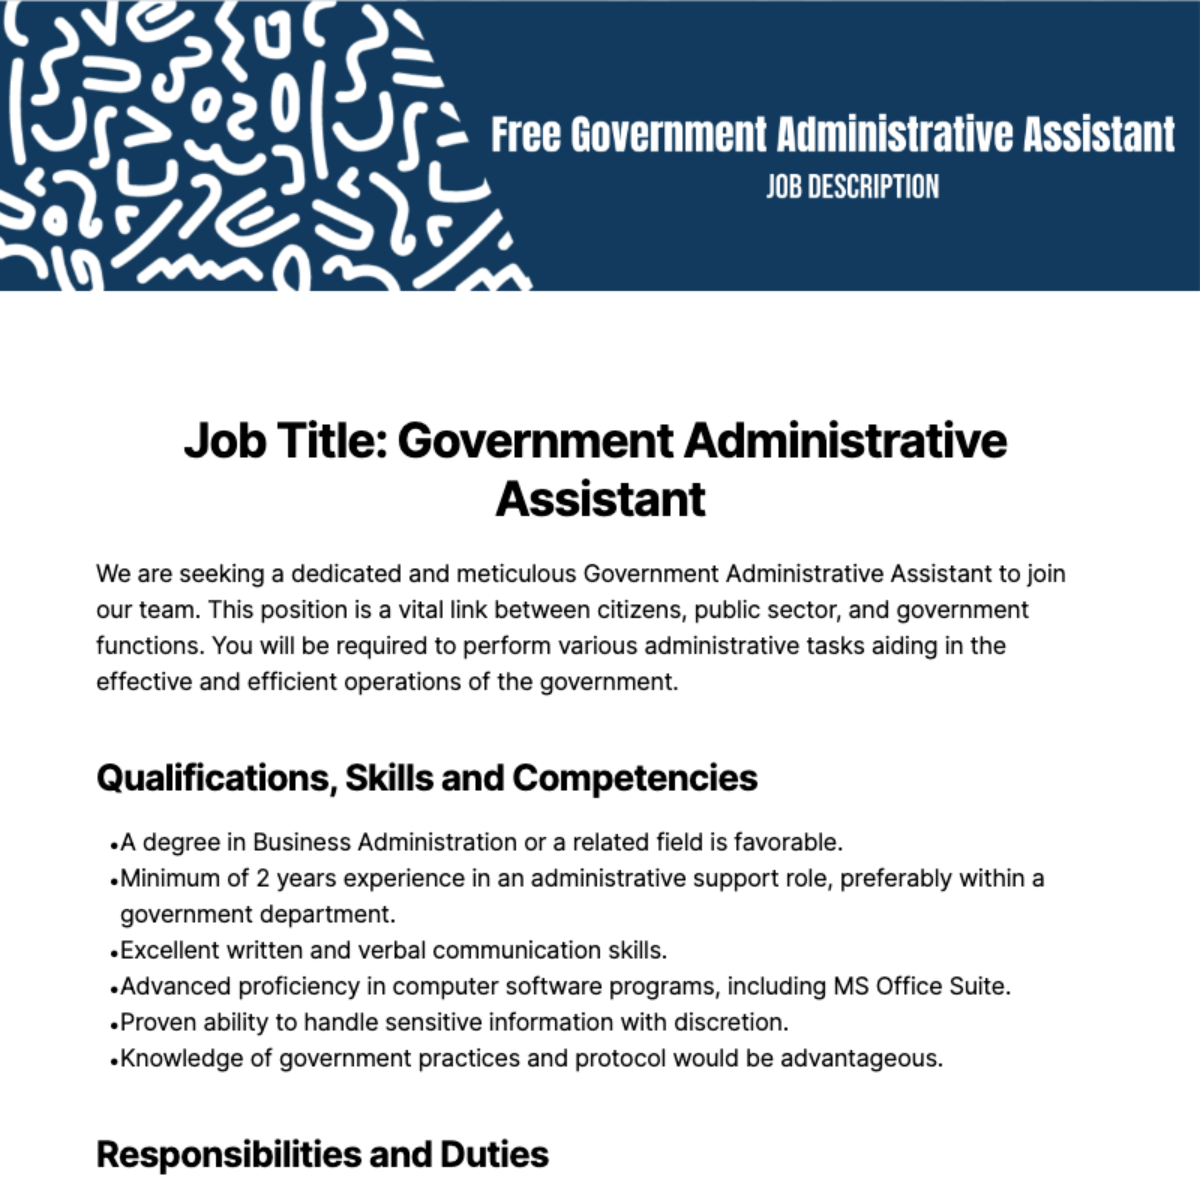 Free Government Administrative Assistant Job Description Template